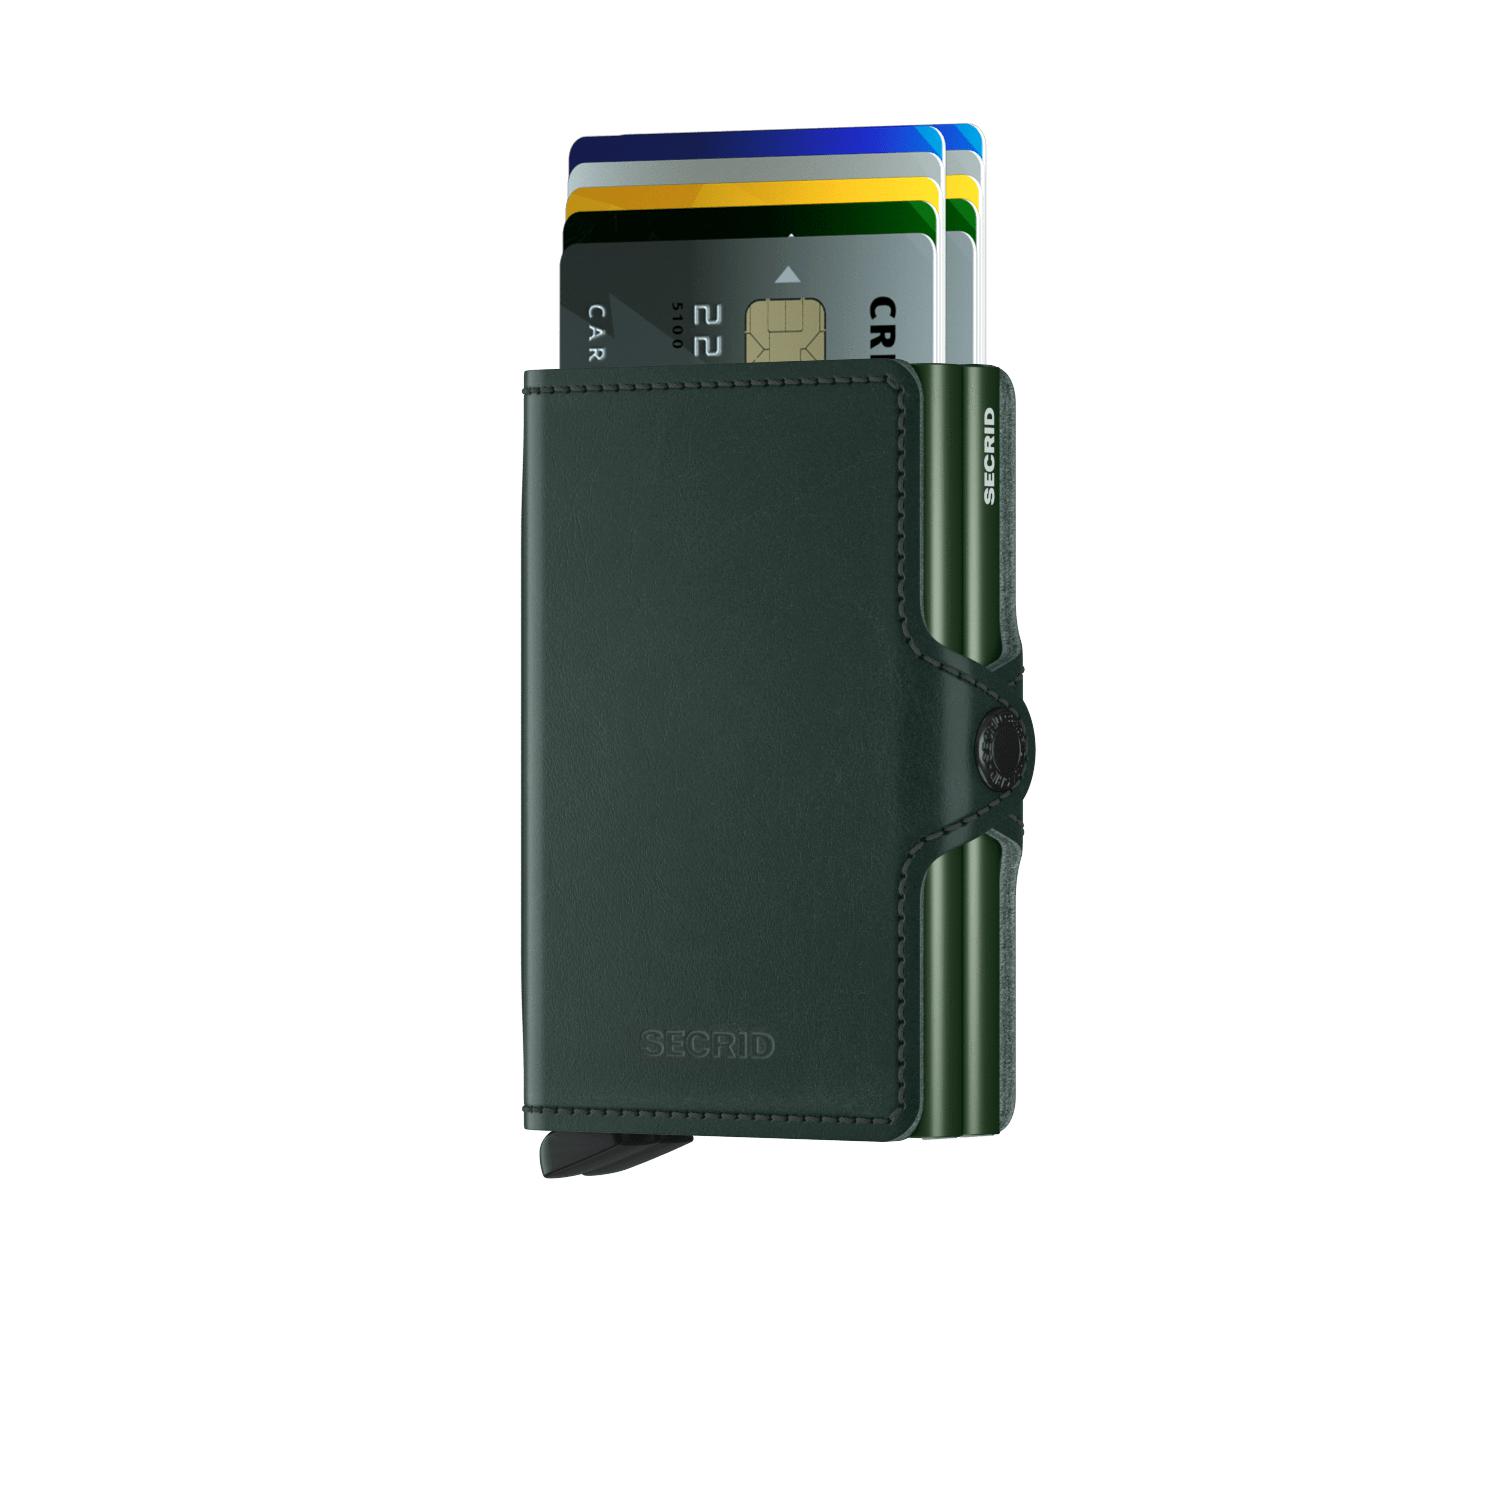 scherp Pidgin bagage SECRID CardProtector & CardSlide wallet on sale - Free UK&EU delivery  Tagged "SECRID Twinwallet" - Slim Wallet Junkie